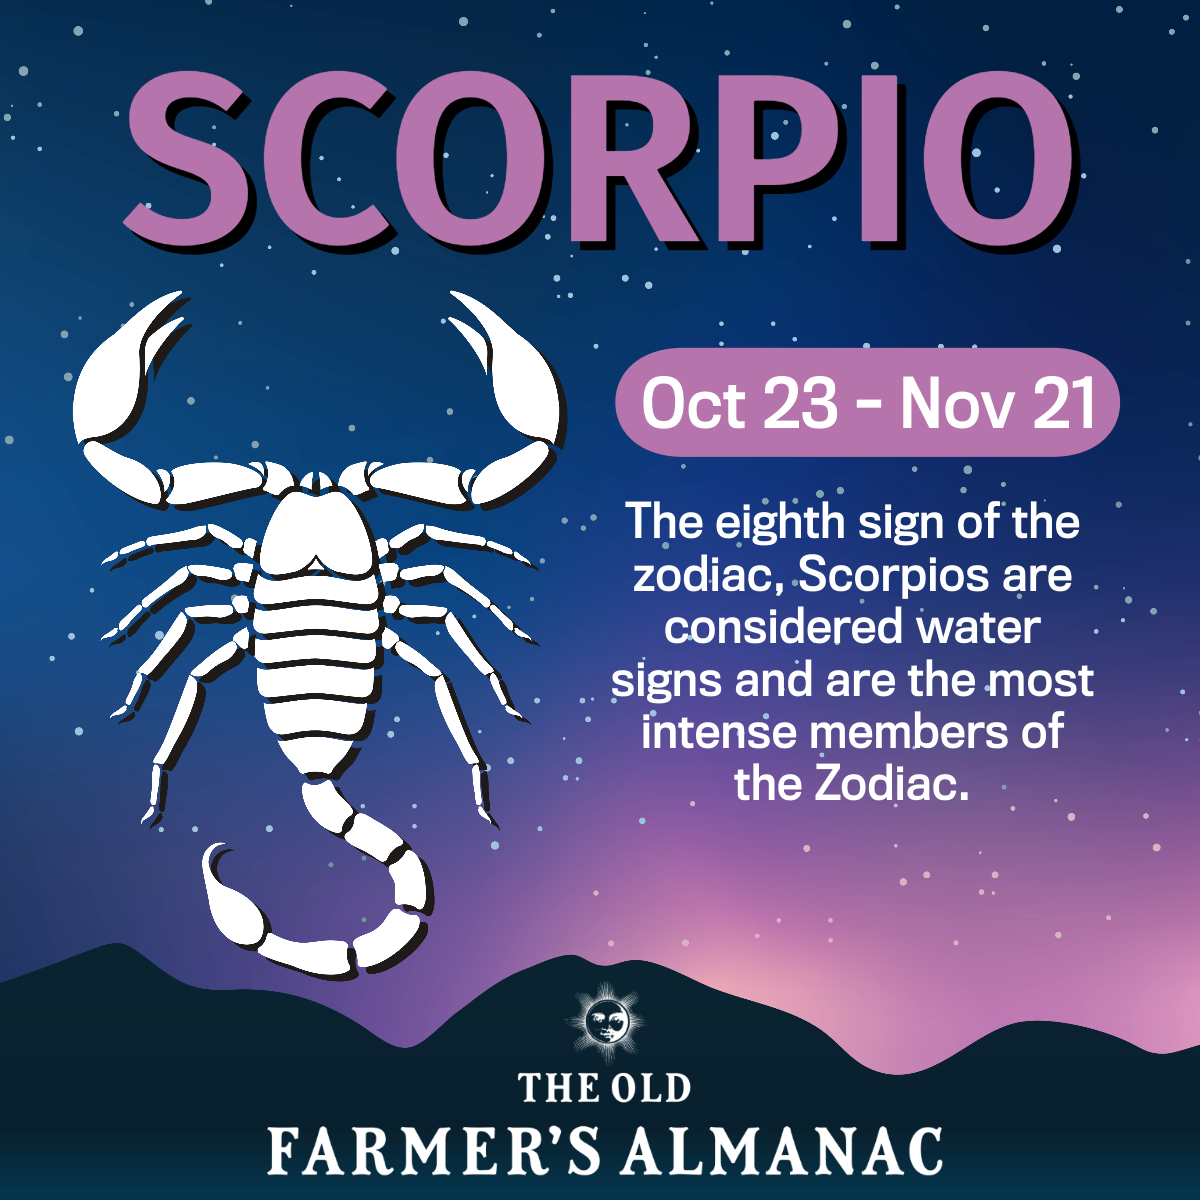 Zodiac Scorpio Oct 23 